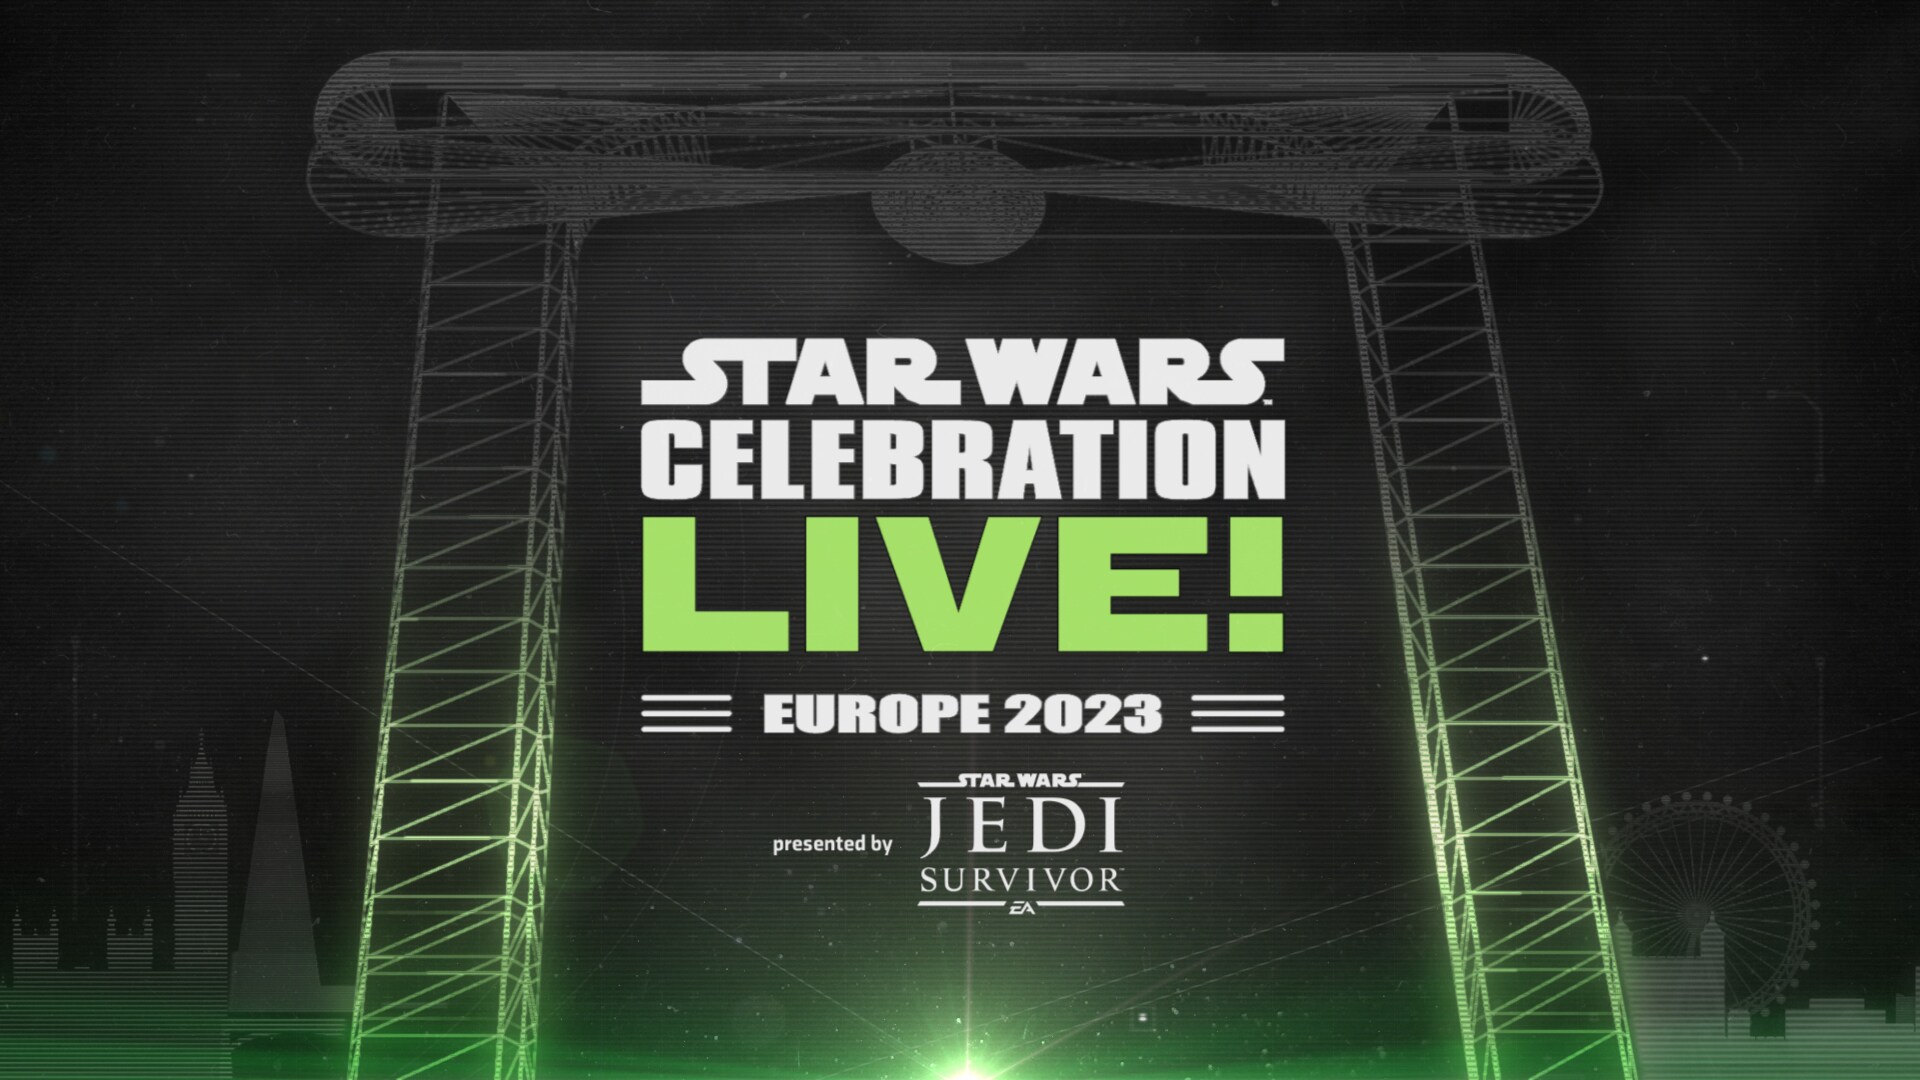 Star Wars Celebration Live! logo